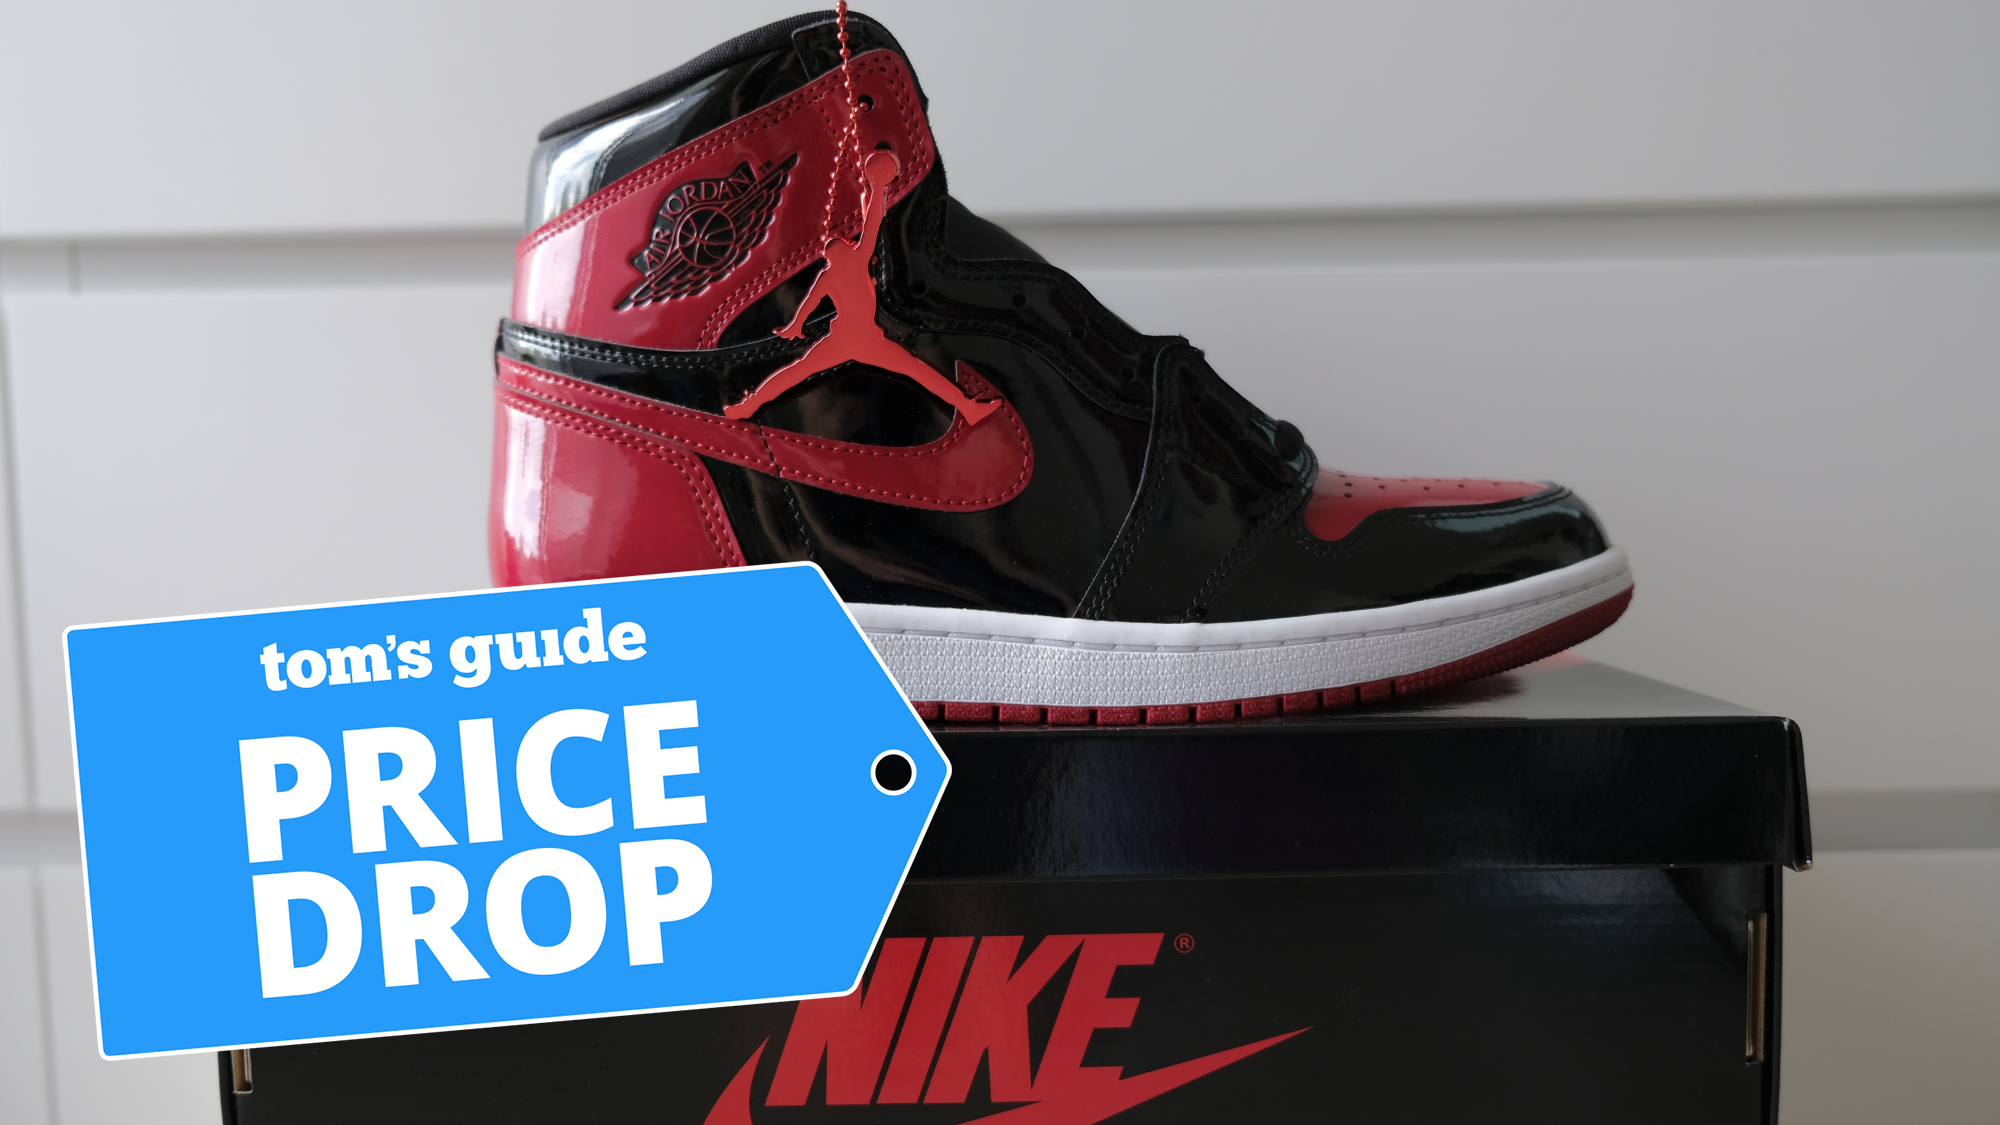 Nike Air Jordans shown on Nike shoe box